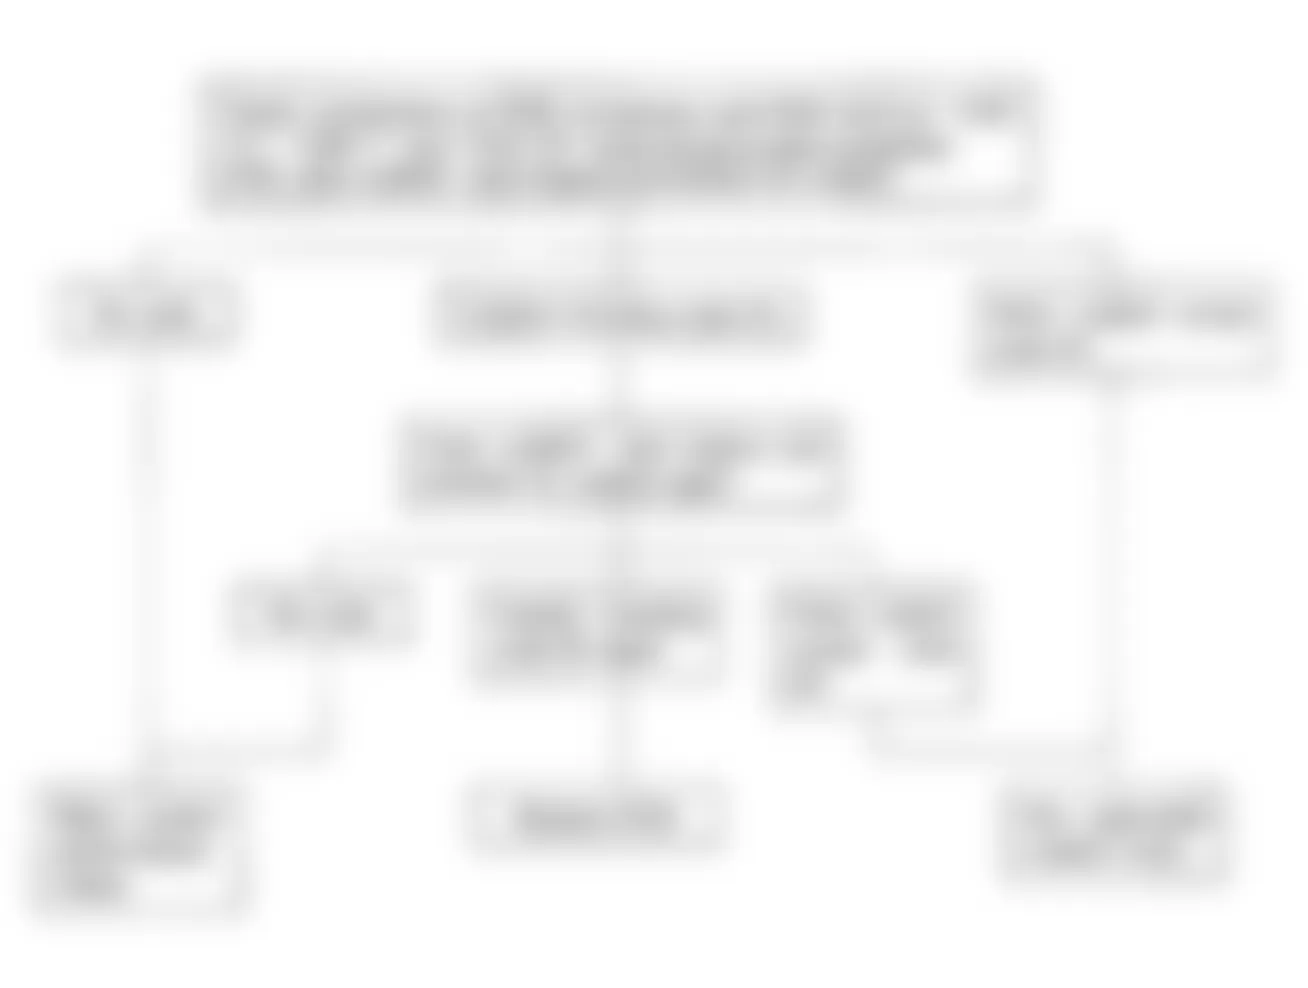 Isuzu Amigo XS 1991 - Component Locations -  Code No. 55 Flow Chart, Faulty ECM